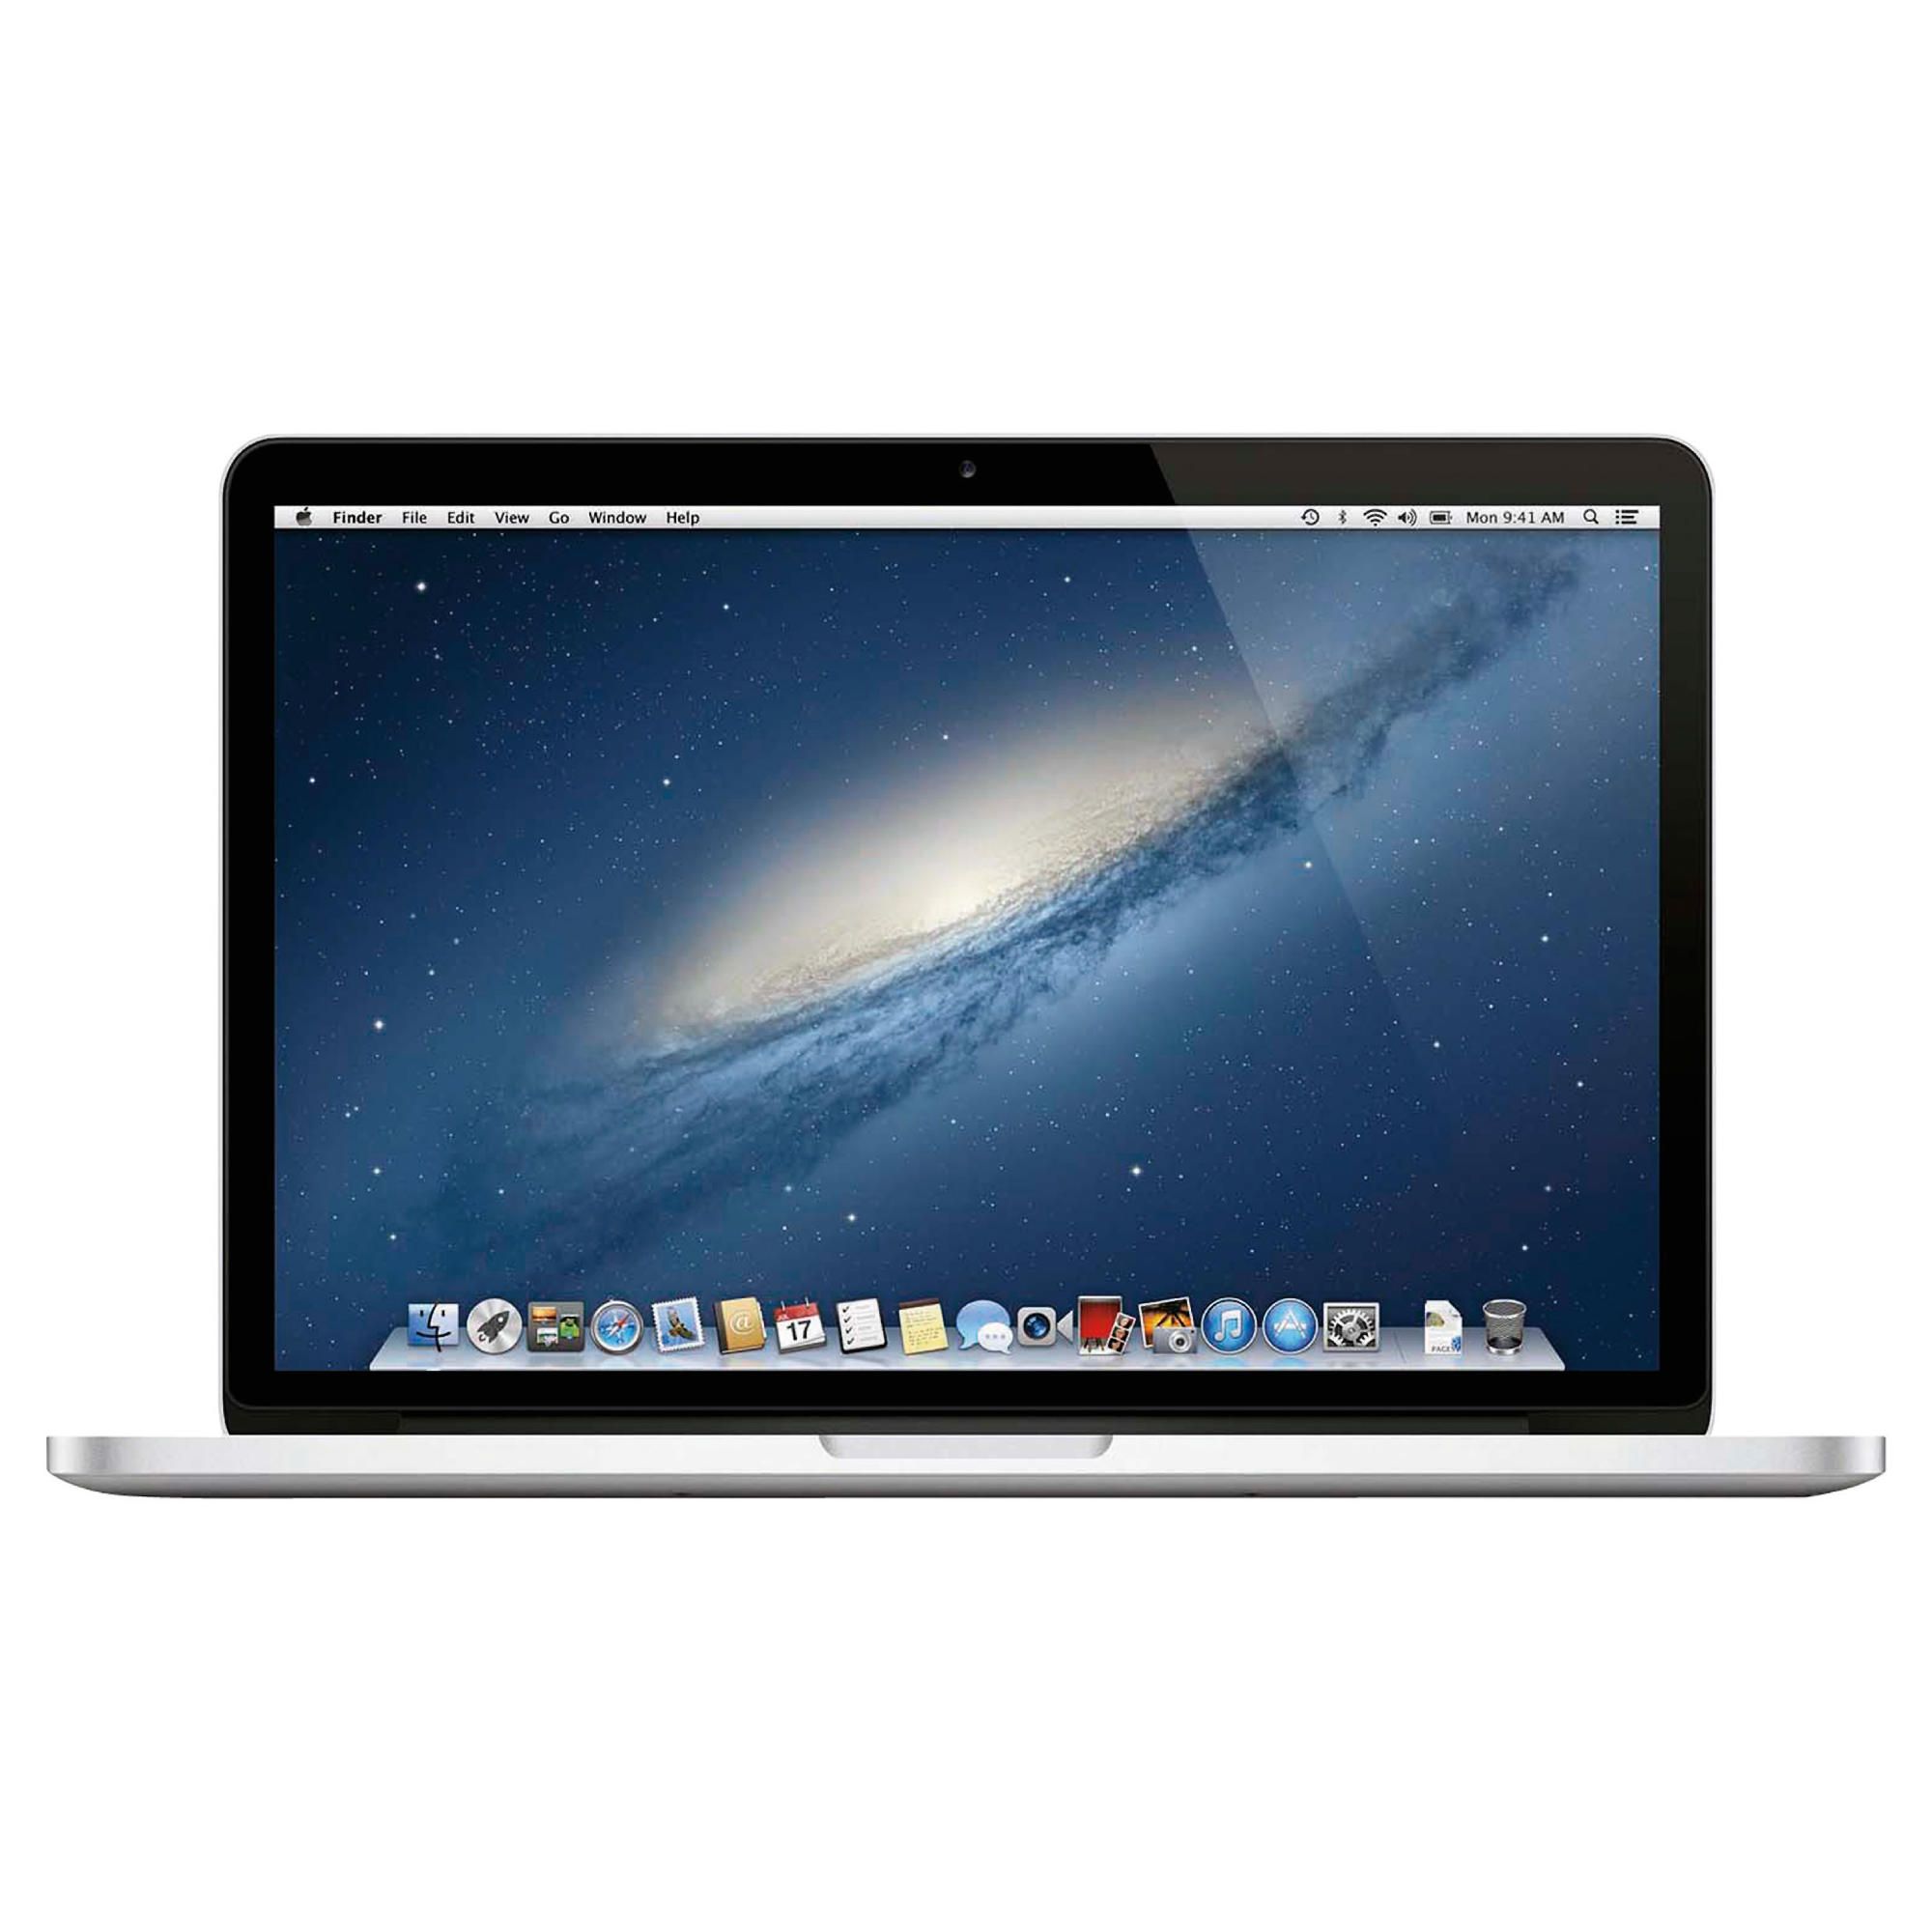 MacBook Pro 13.3” with Retina display ME864B/A 2.4GHZ 4GB 128GB Flash Drive